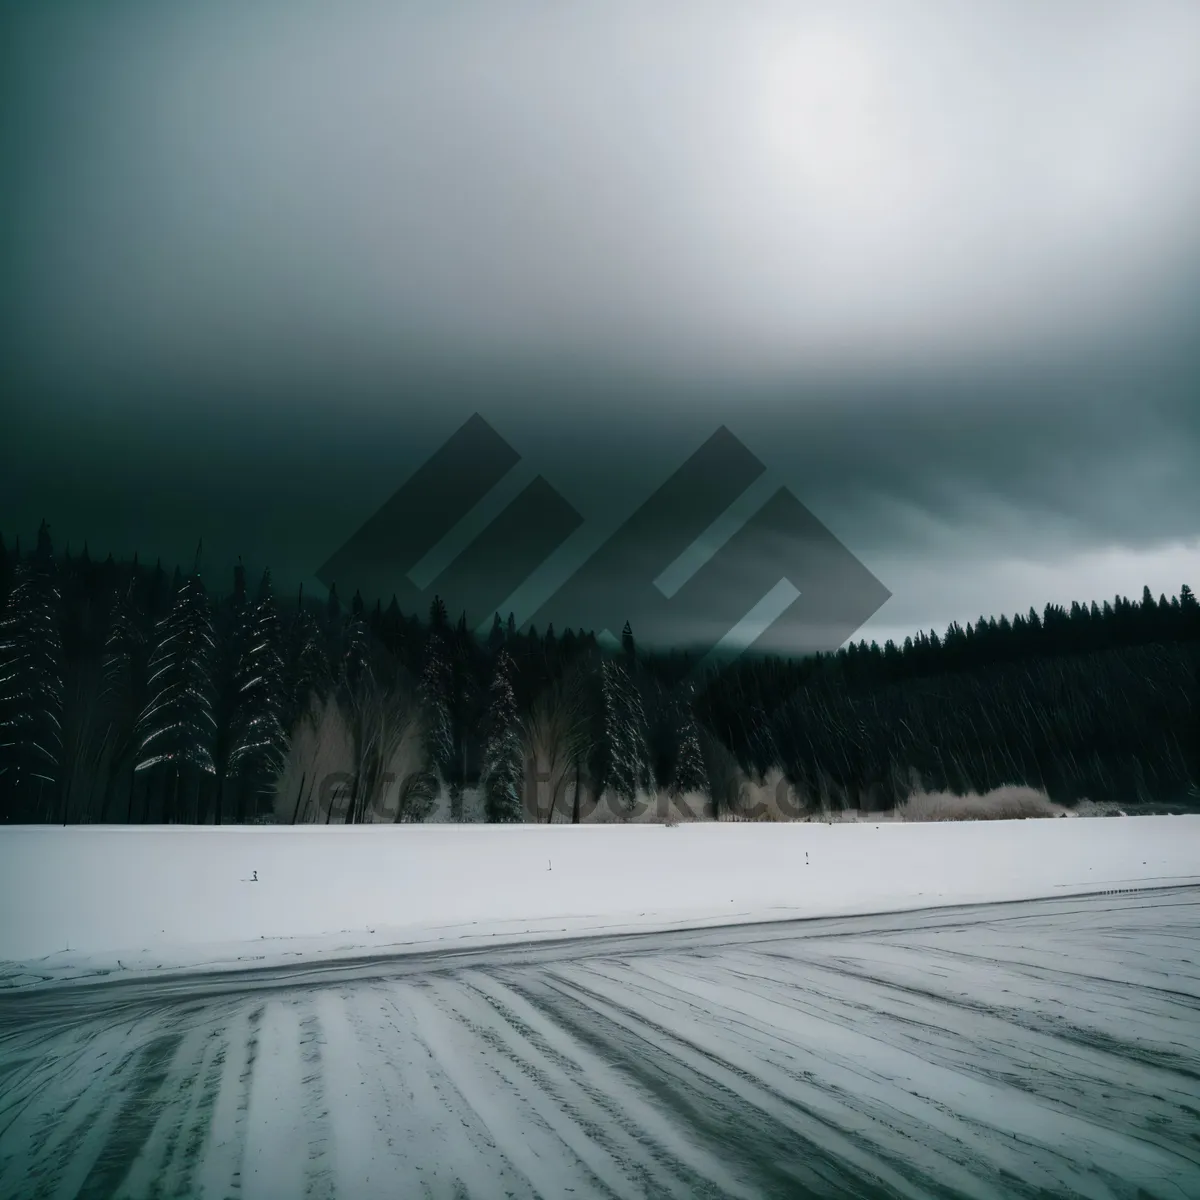 Picture of Winter Wonderland: Majestic Frozen Mountain Landscape